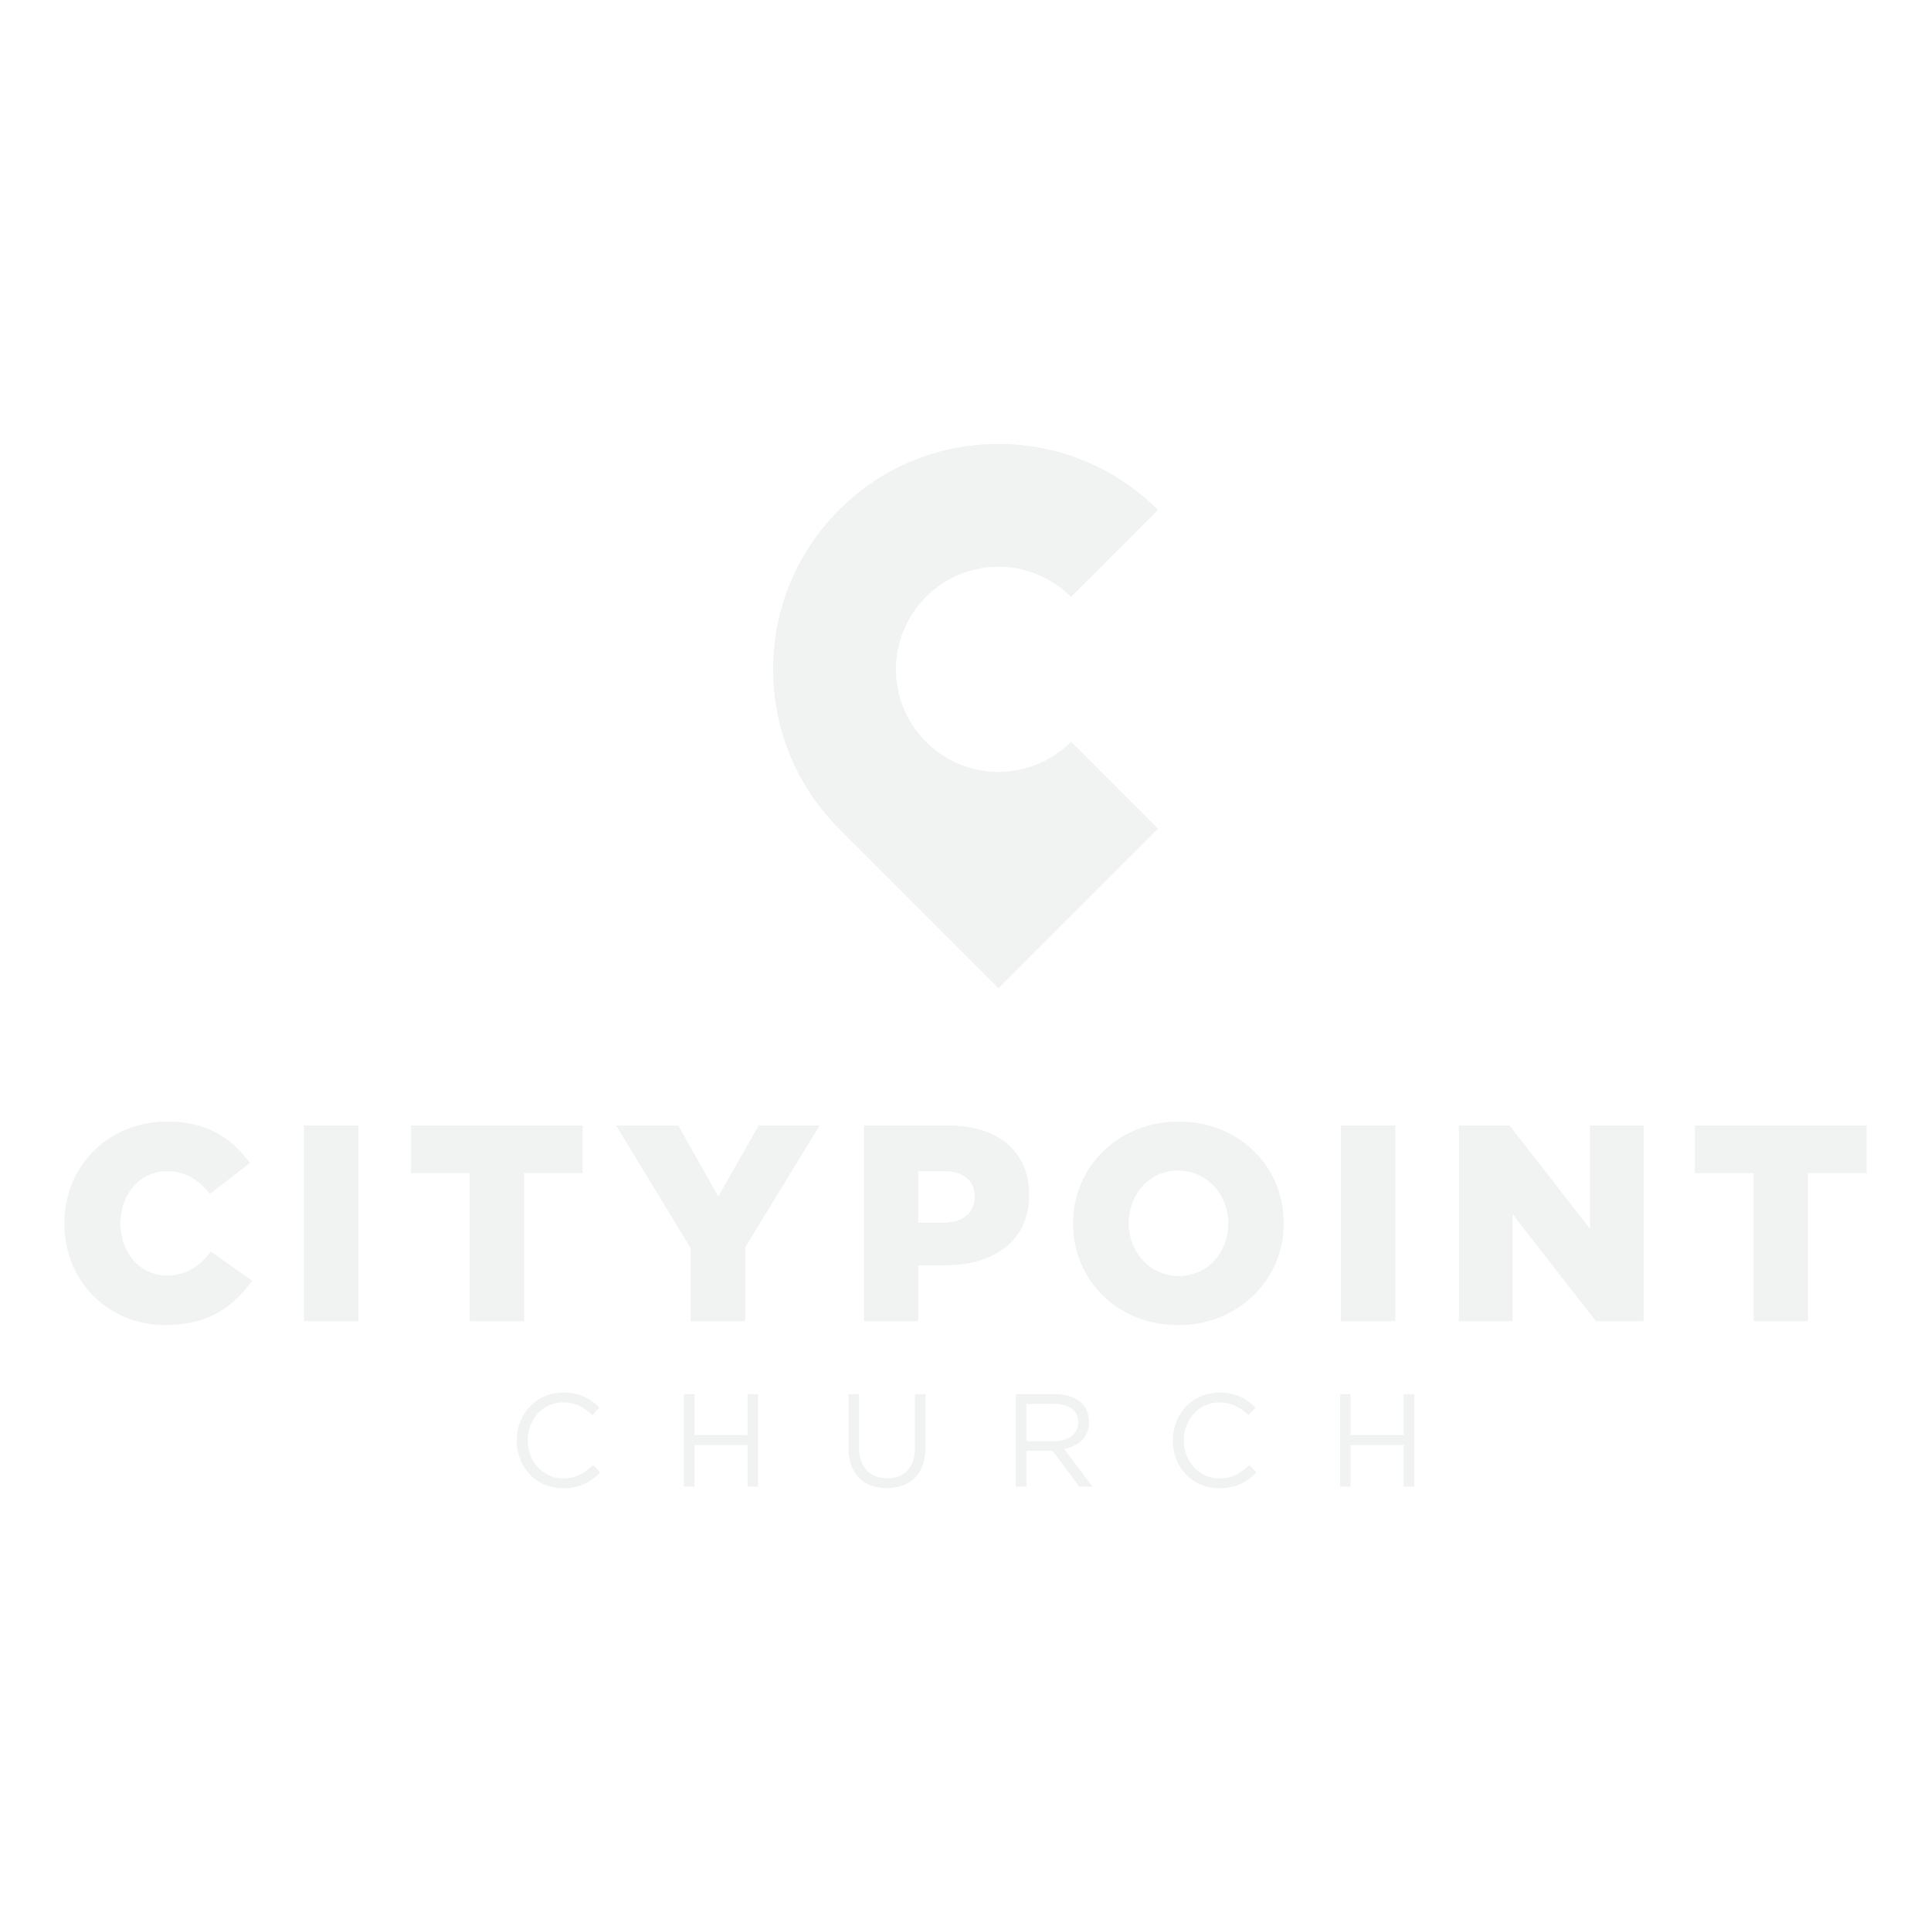 Citypoint Church